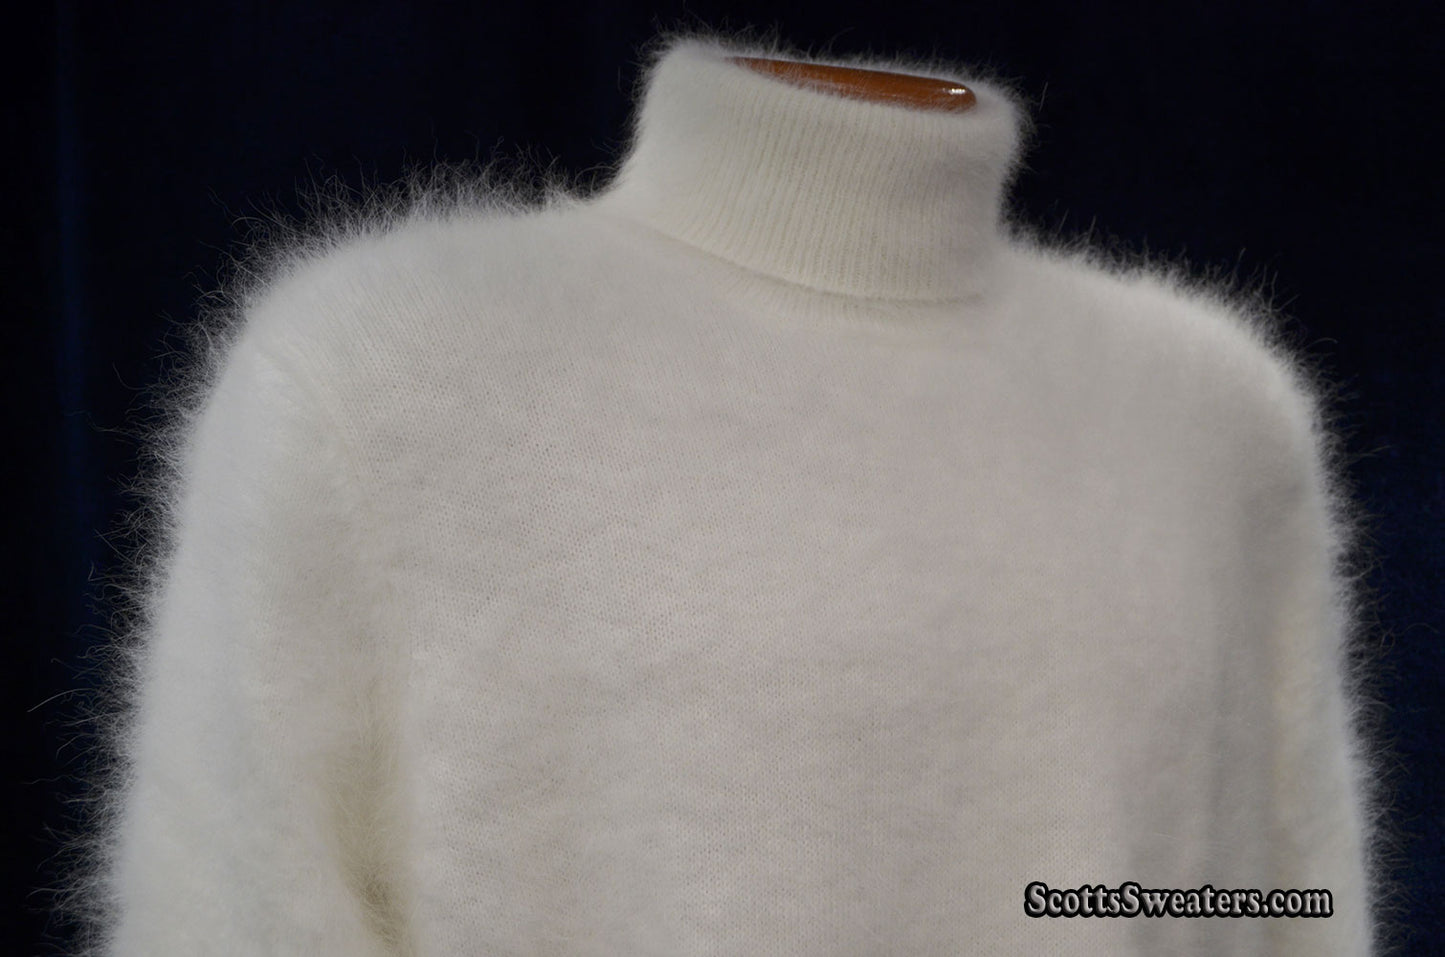 616-090T Men's Ultra-Soft Angora Turtleneck Sweater